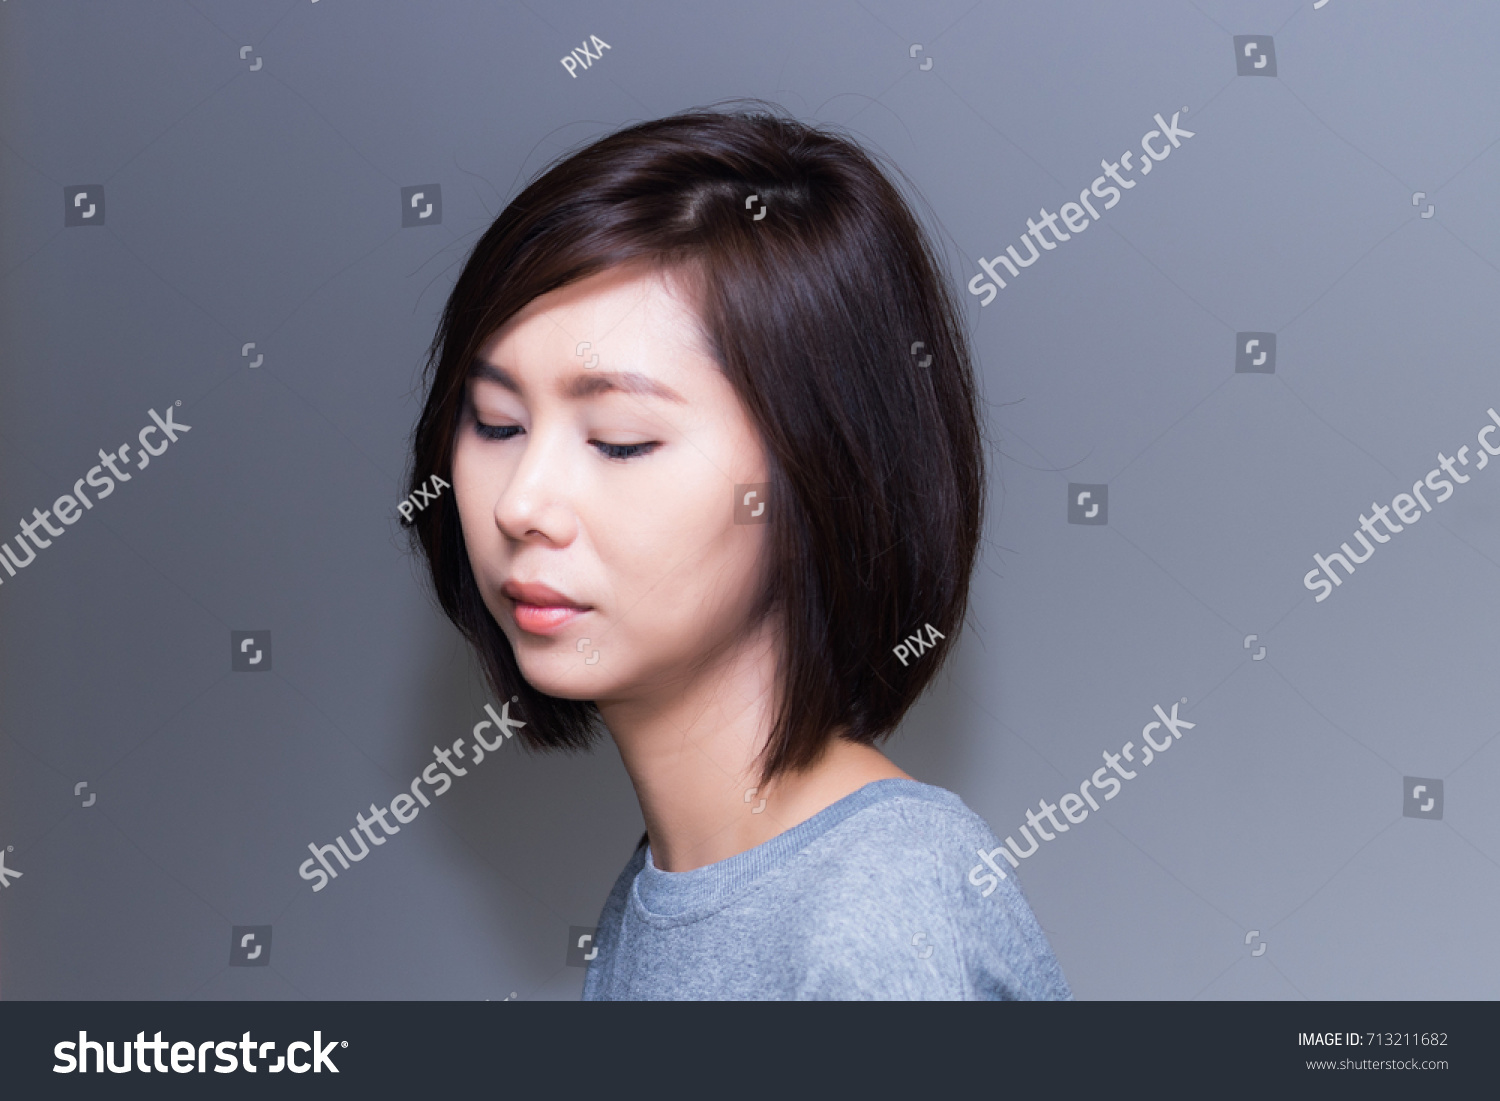 Beautiful Young Asian Woman Short Haircut Stock Image Download Now